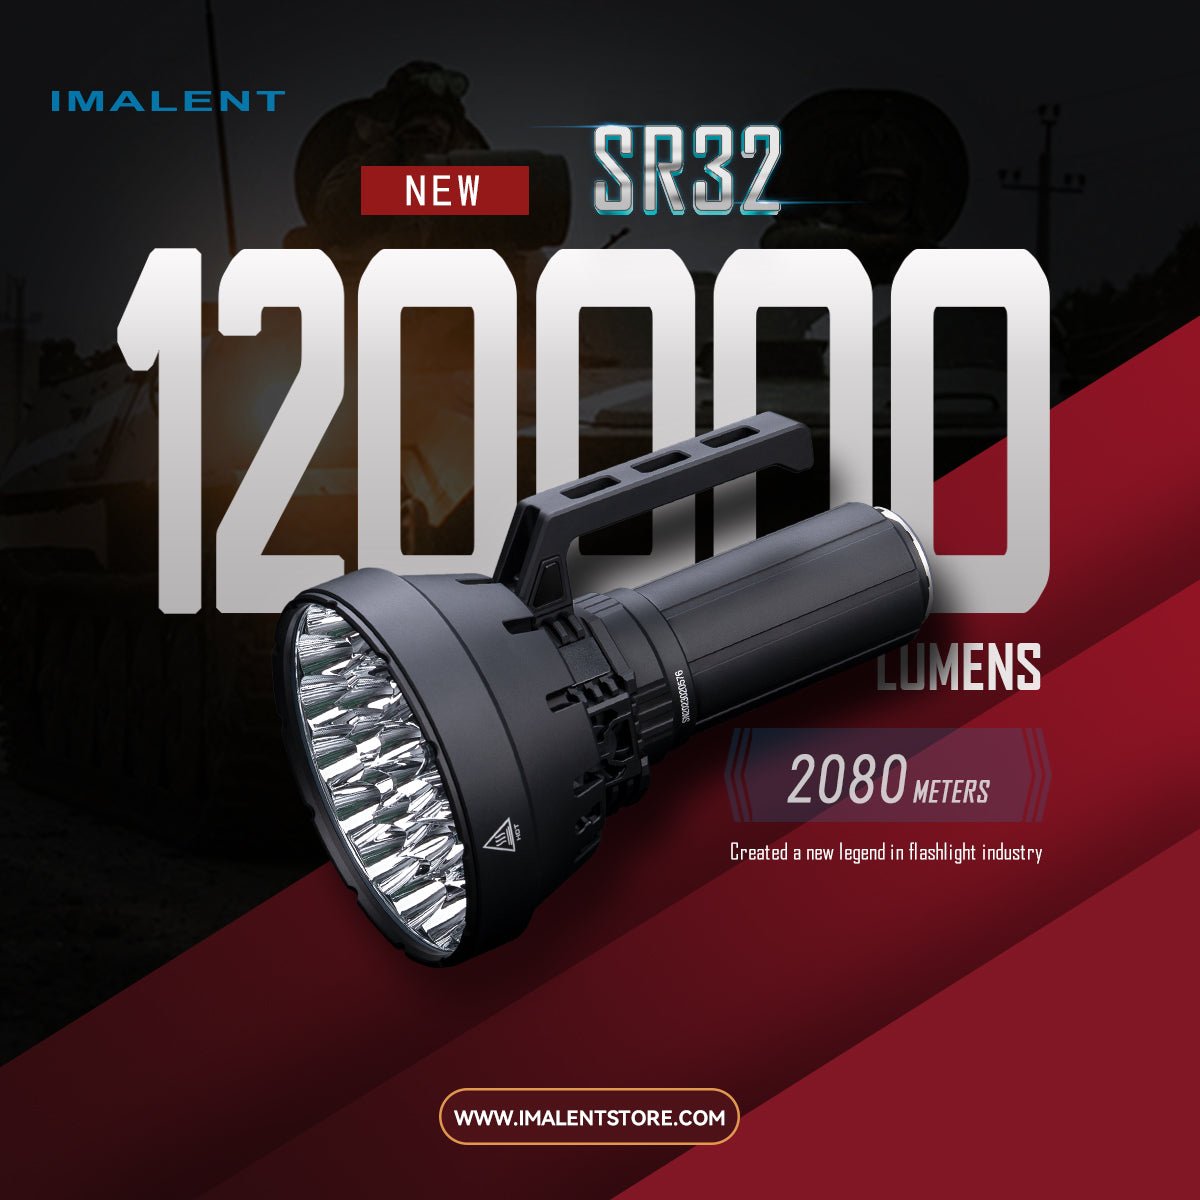 IMALENT SR32 grand launch